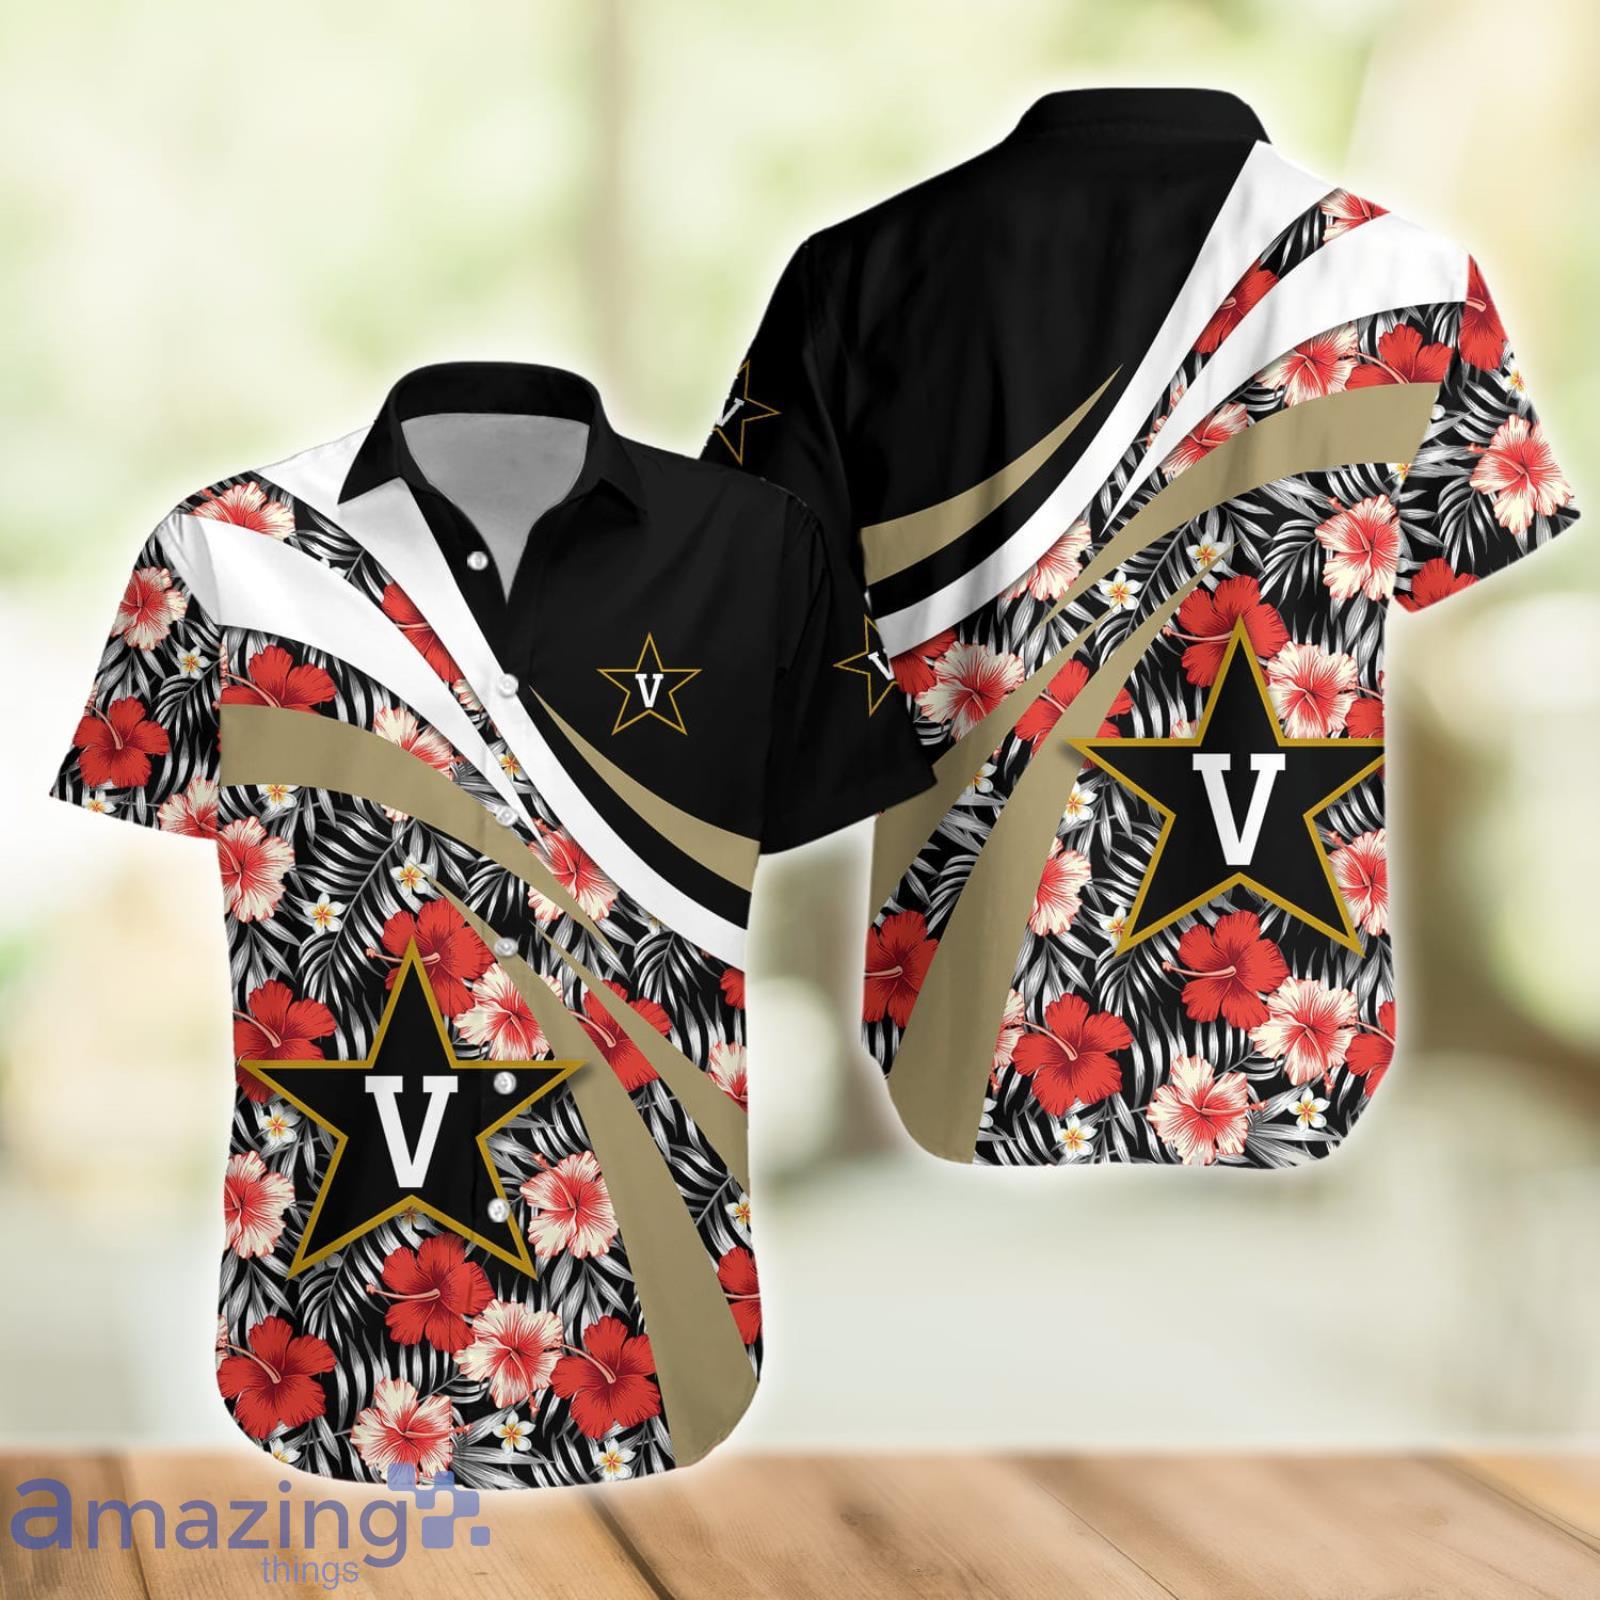 Vanderbilt Commodores NCAA Jerseys for sale